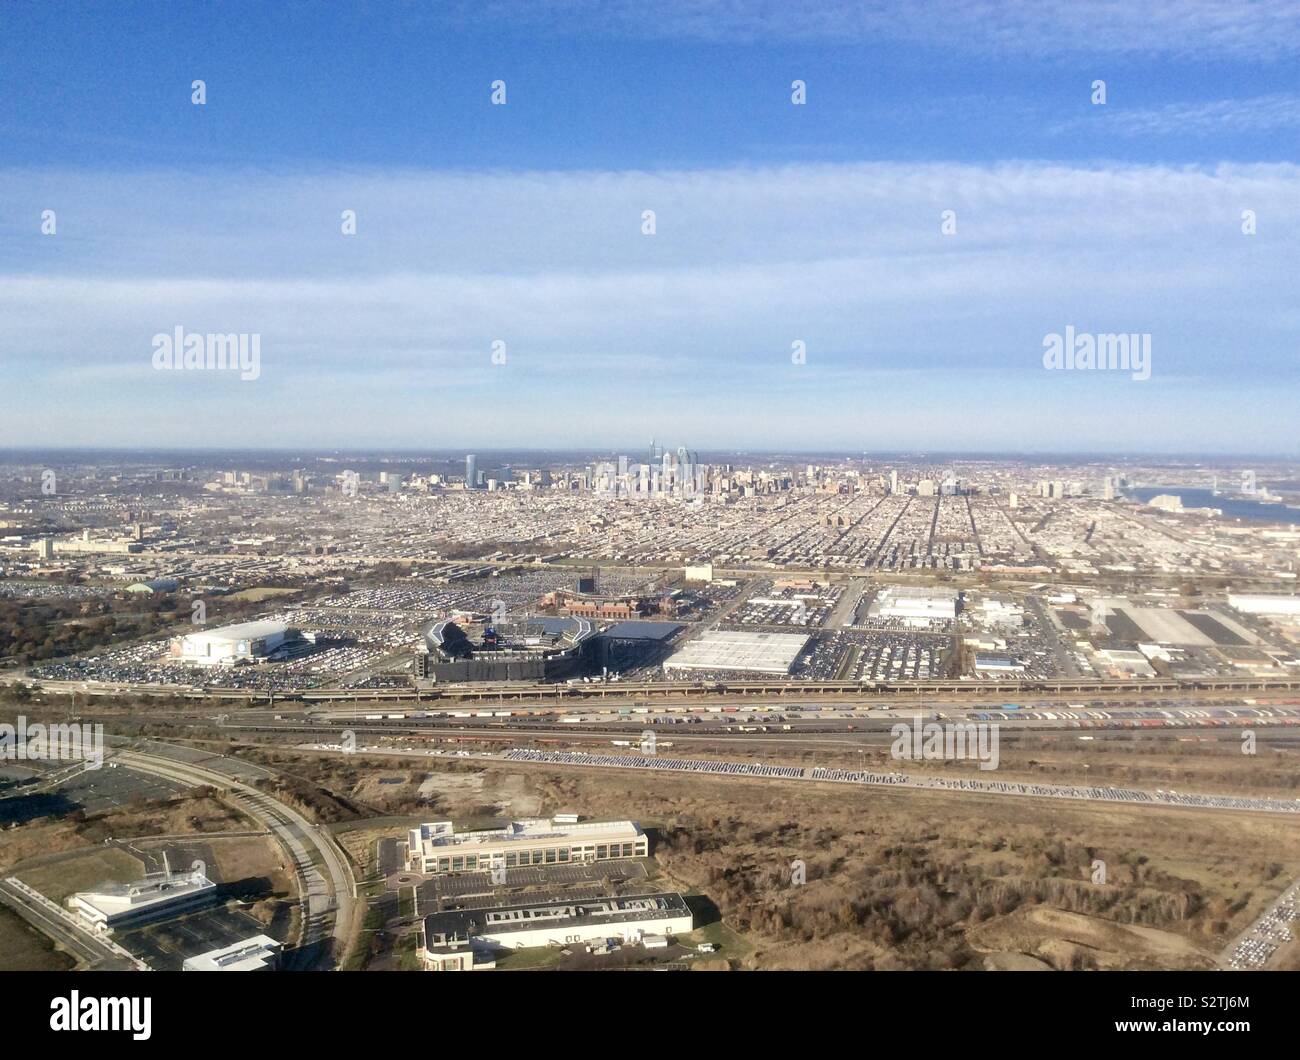 Philadelphia skyline and stadiums taken from airplane window. Stock Photo